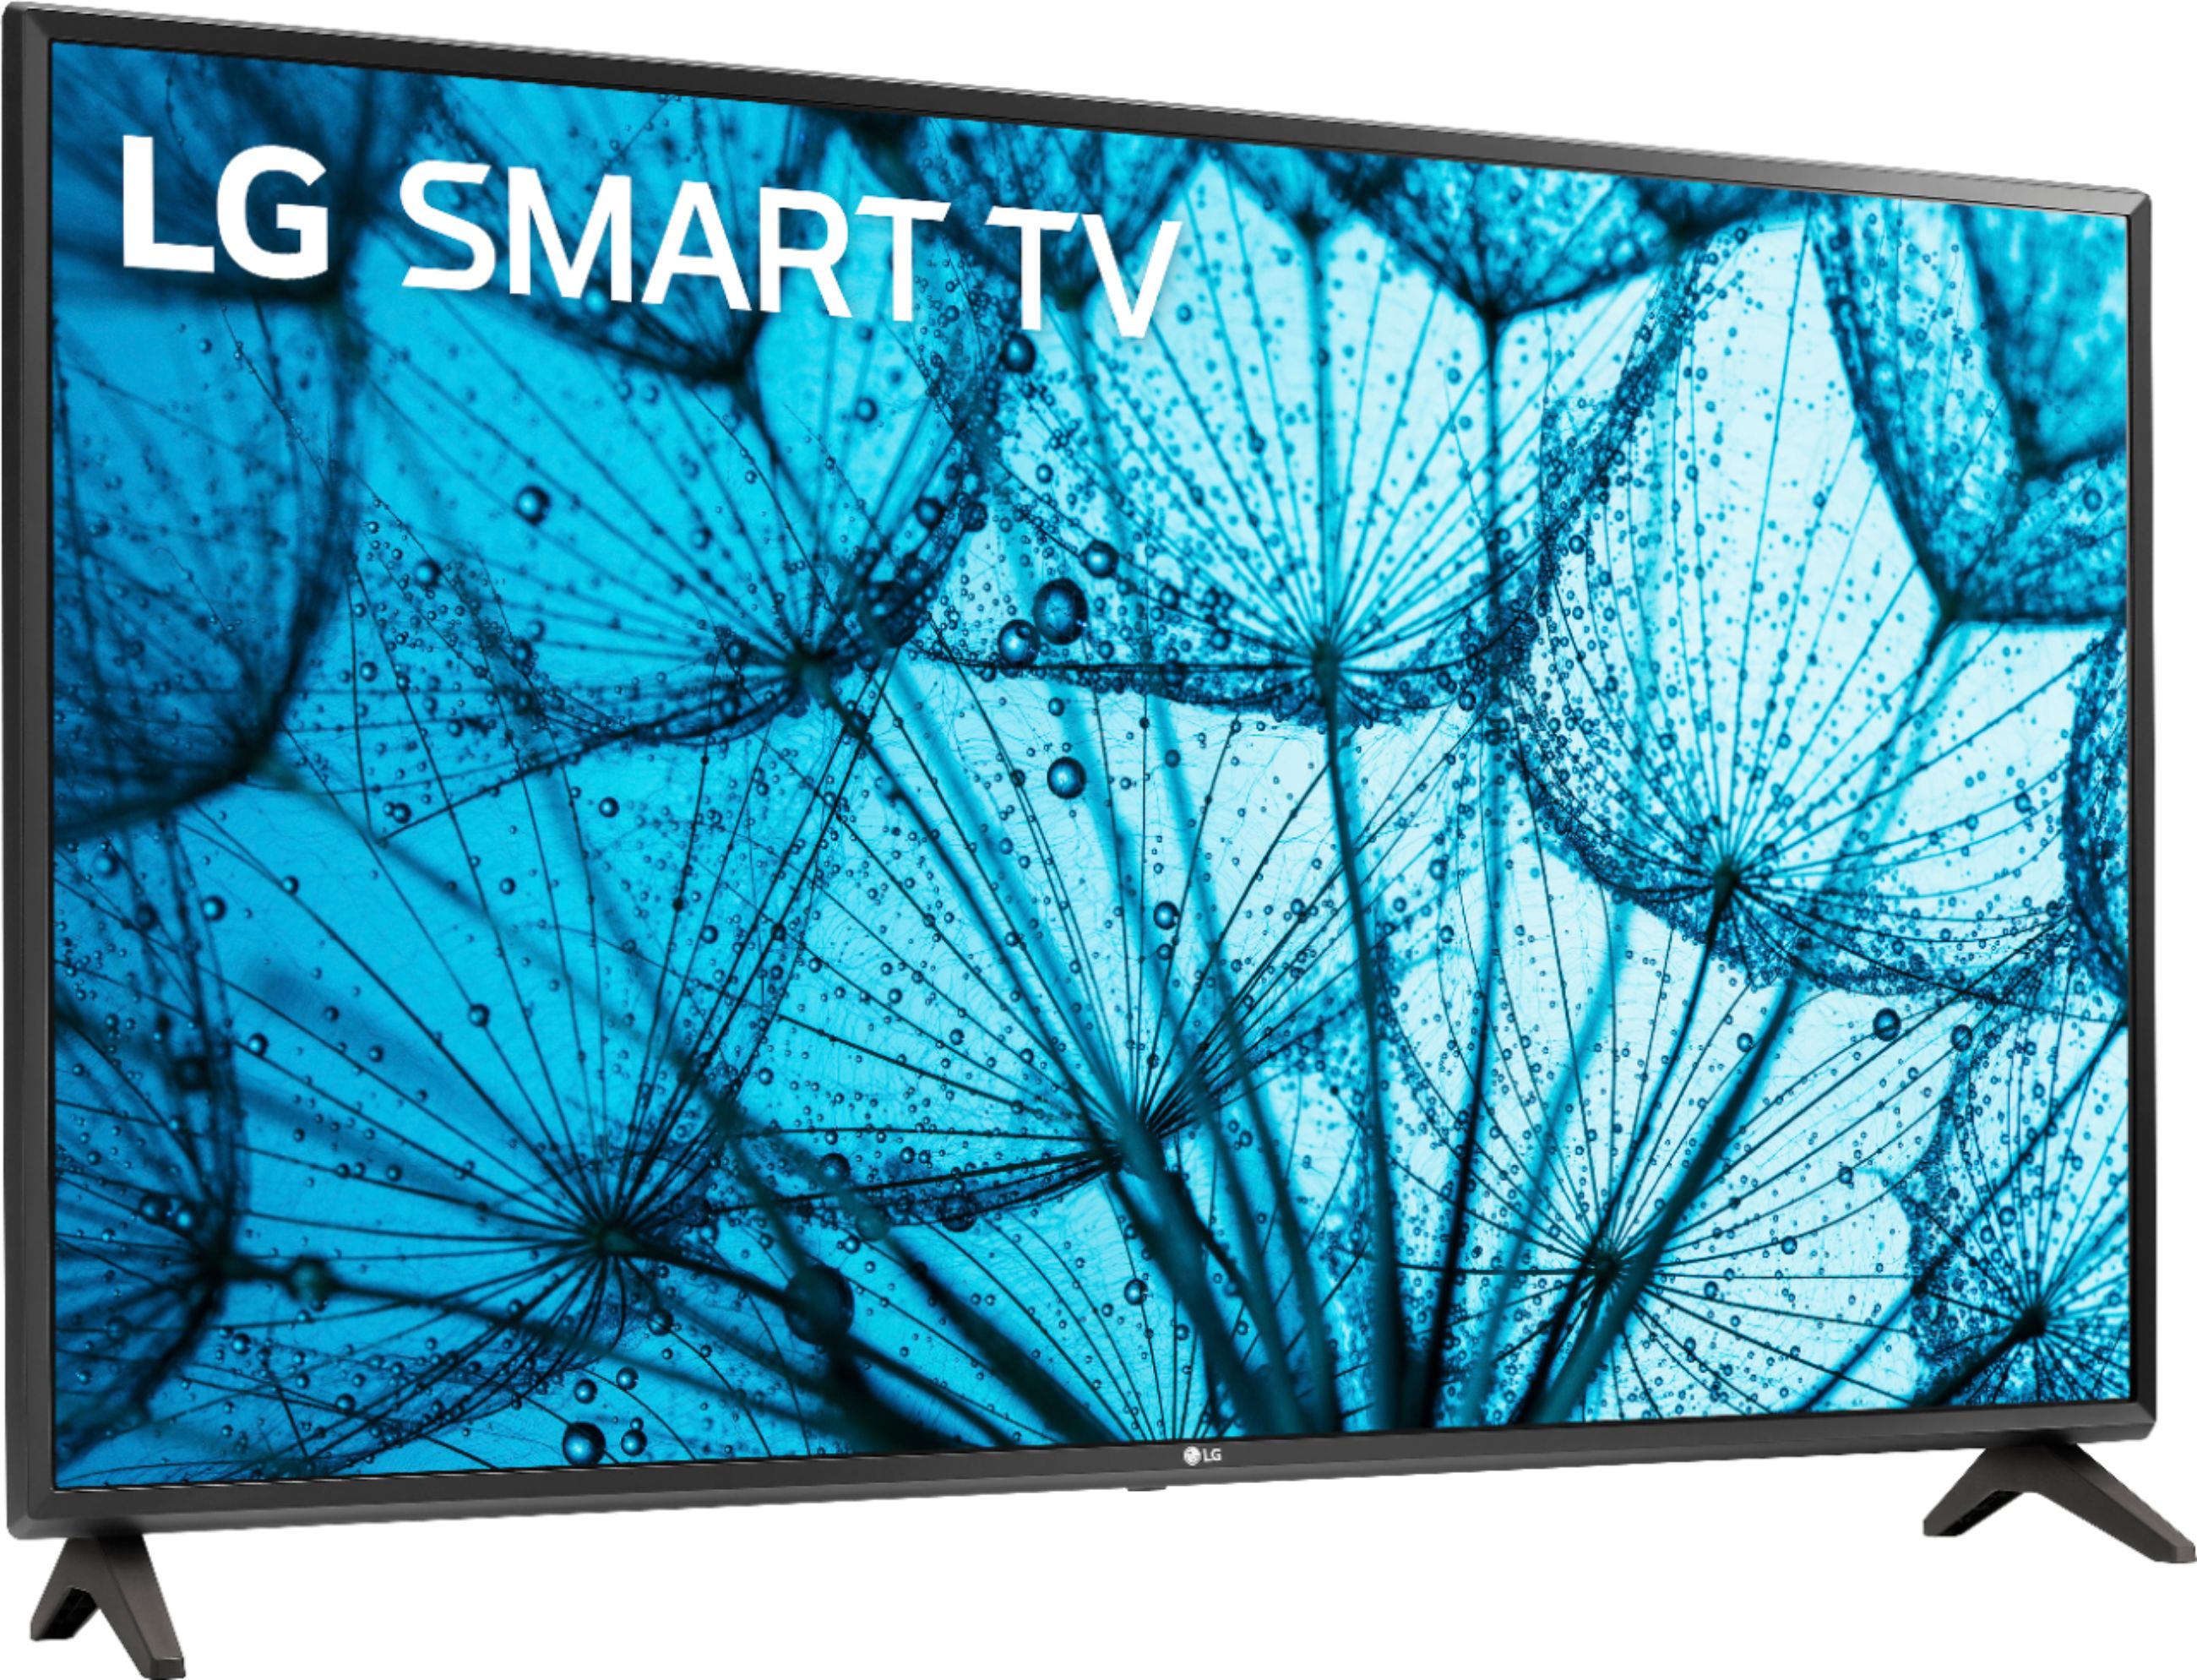 LG 37LS575s - Televisor LED, 37 Pulgadas, 1080p, Smartphone Control, 4  HDMI, DLNA, Ci+ para TDT Premium